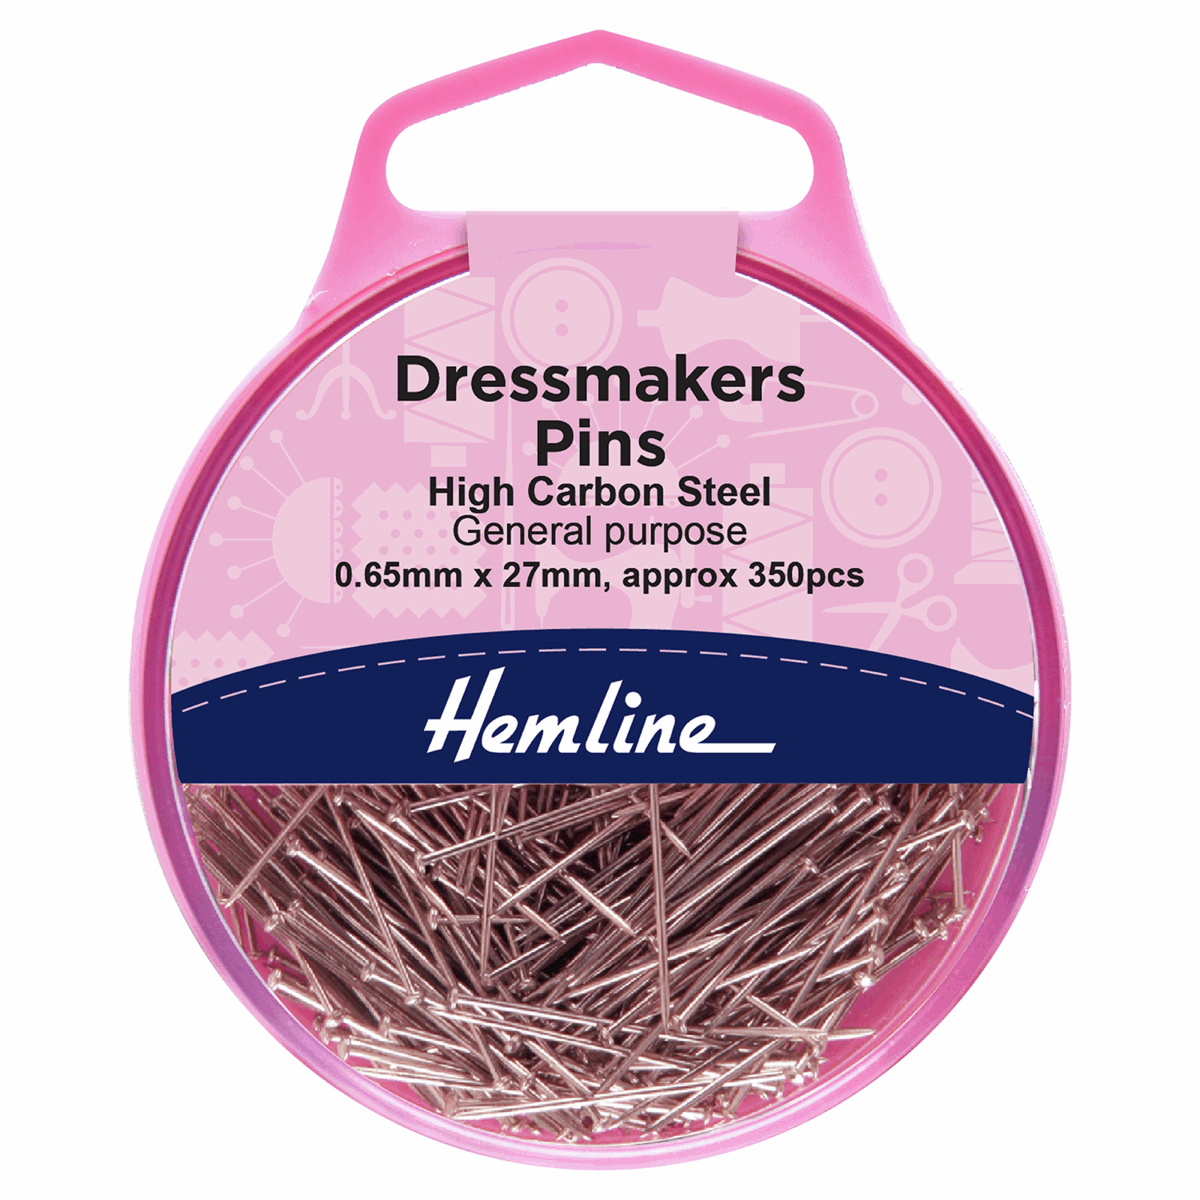 Hemline Professional Dressmakers pins